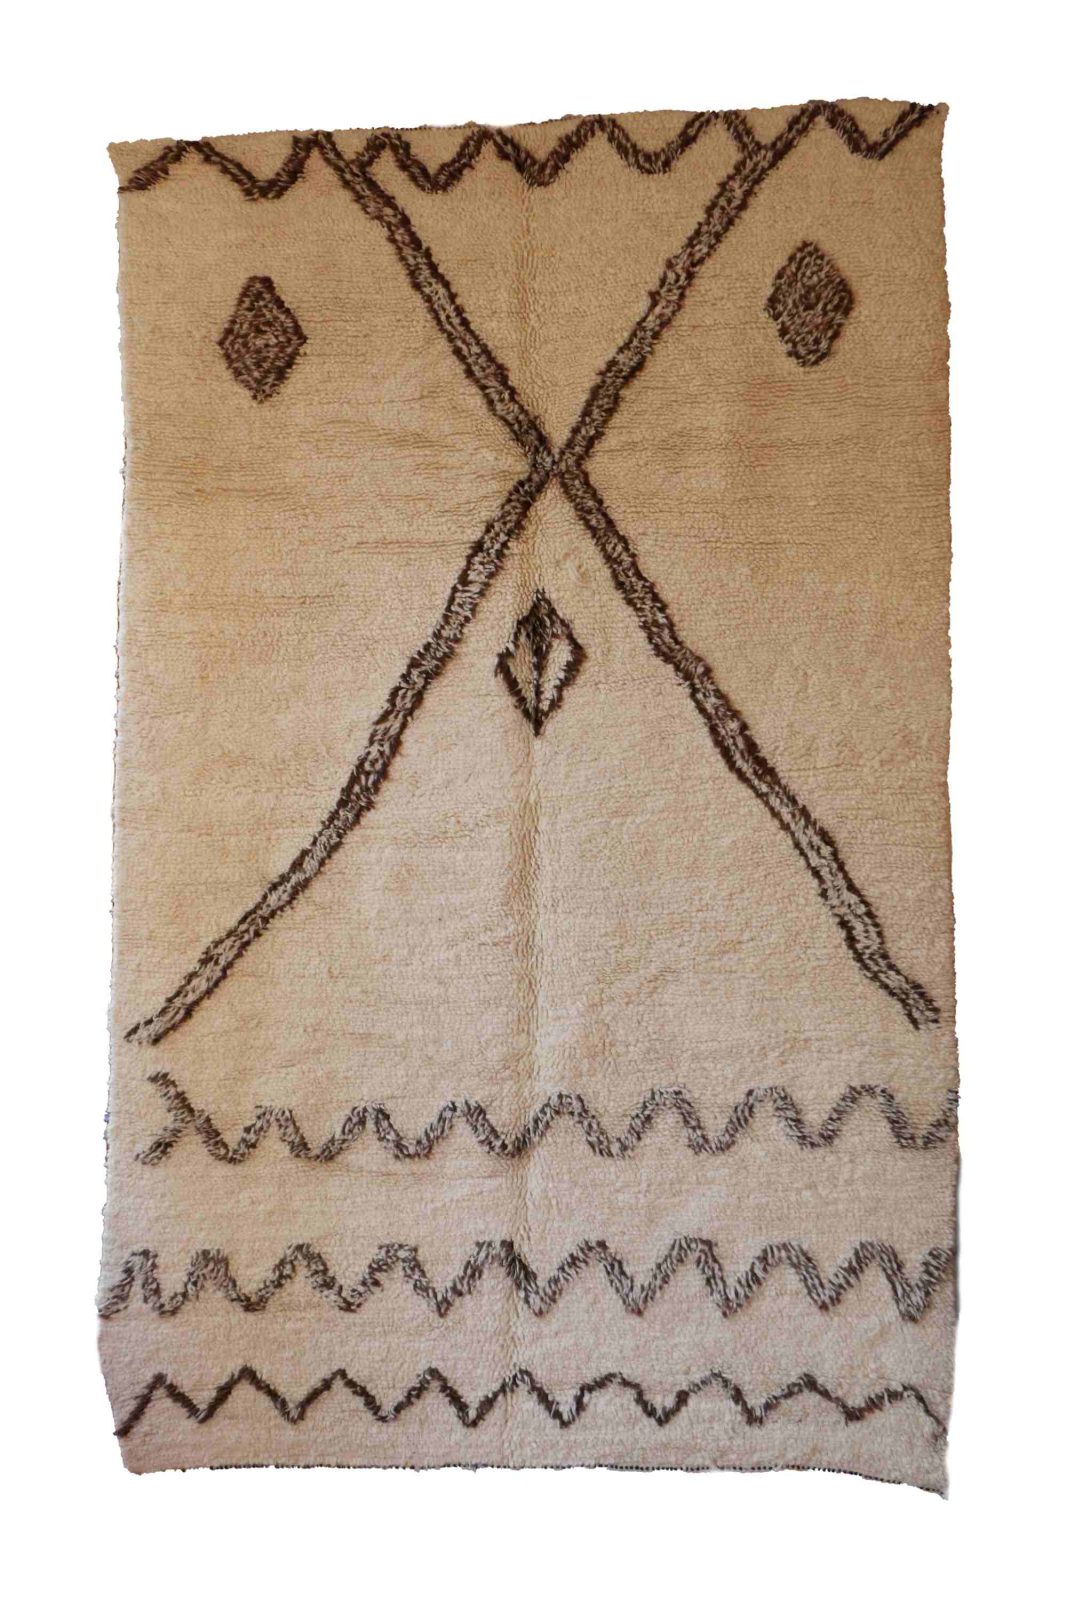 Kilim Beni Ourain Berber Carpet, Moroccan 6x10 feet White - Cream Floor Rug  - Moroccan Rugs Online Store